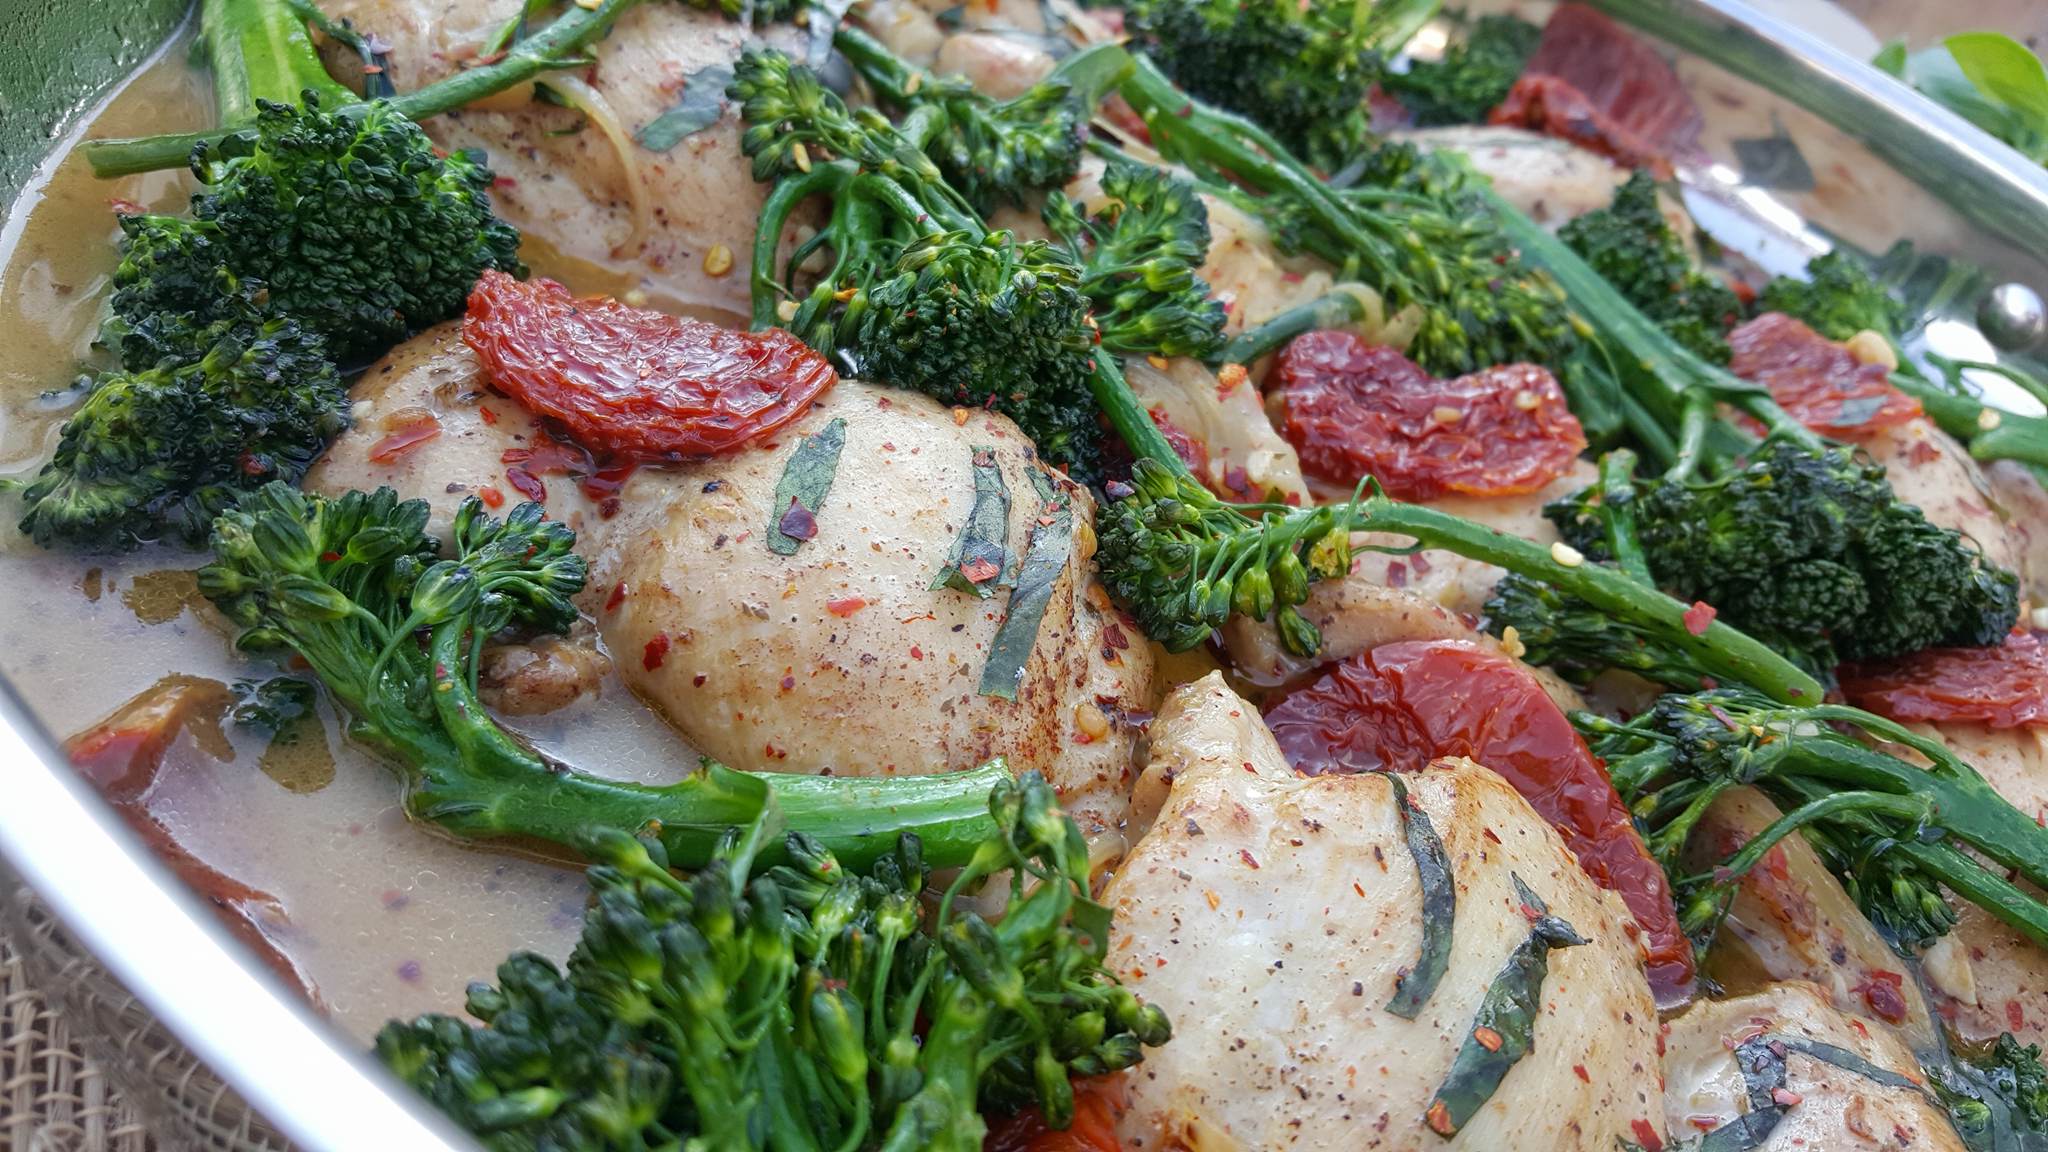 Sundried Tomato Chicken thighs and Broccolini Dish https://cleanfoodcrush.com/sundried-tomato-chicken/